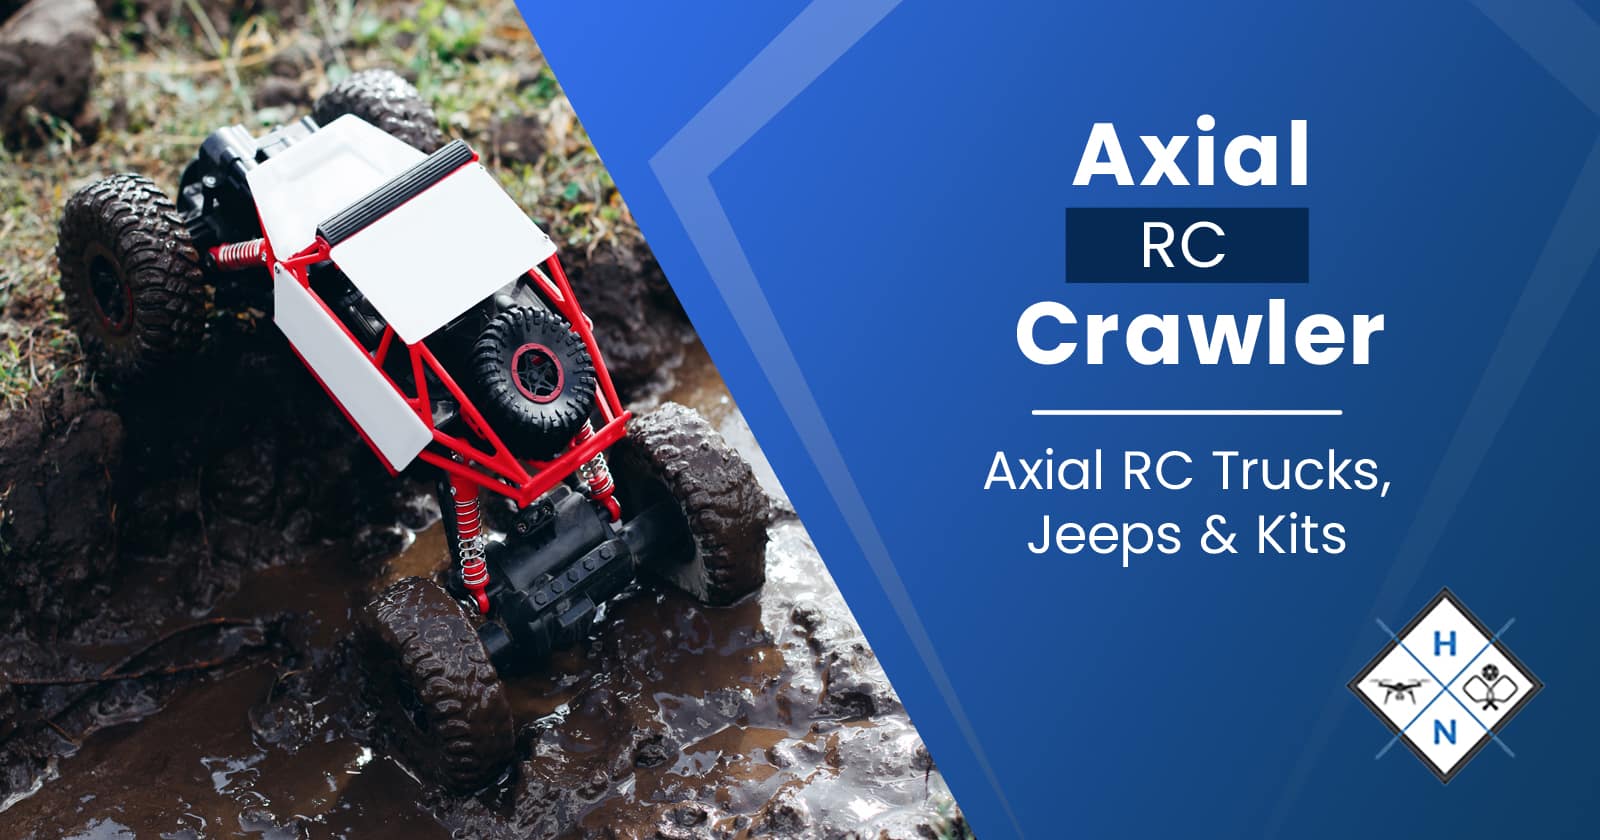 Axial RC Crawler: Axial RC Trucks, Jeeps & Kits